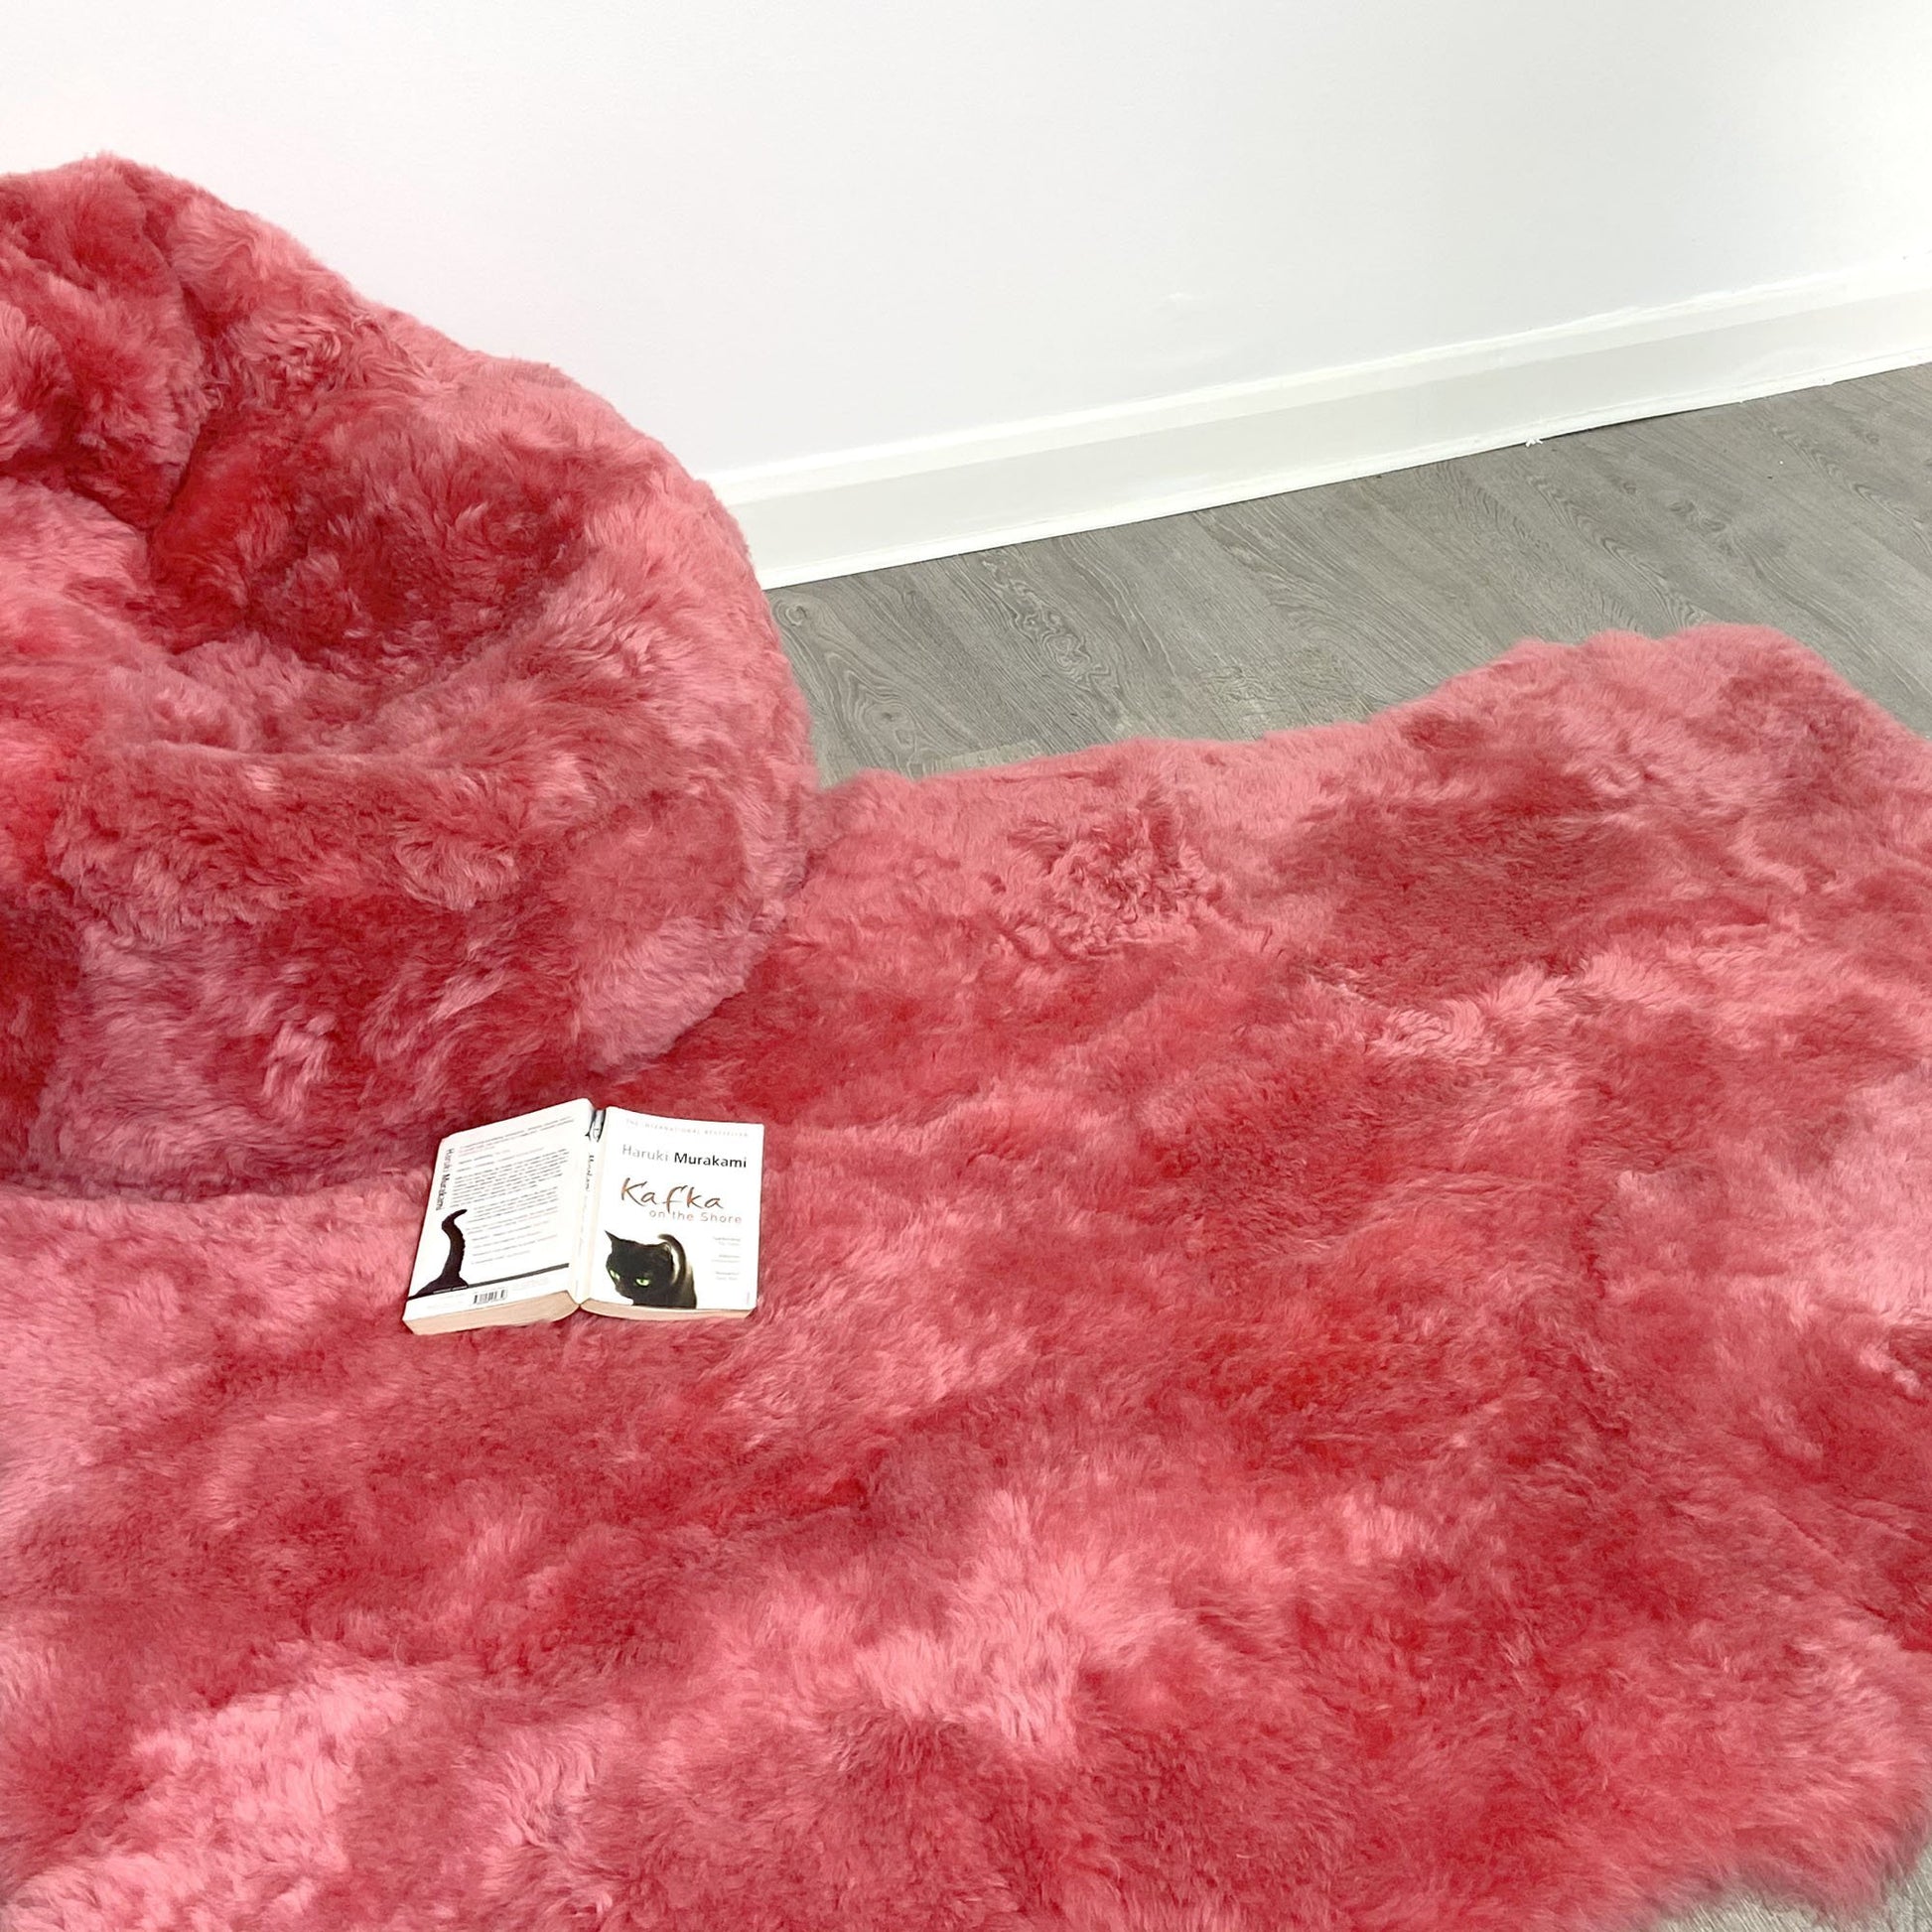 Icelandic Shorn 50mm Sheepskin Rug Coral Pink Sheep Skin Throw ALL SIZES Natural Edge - Wildash London